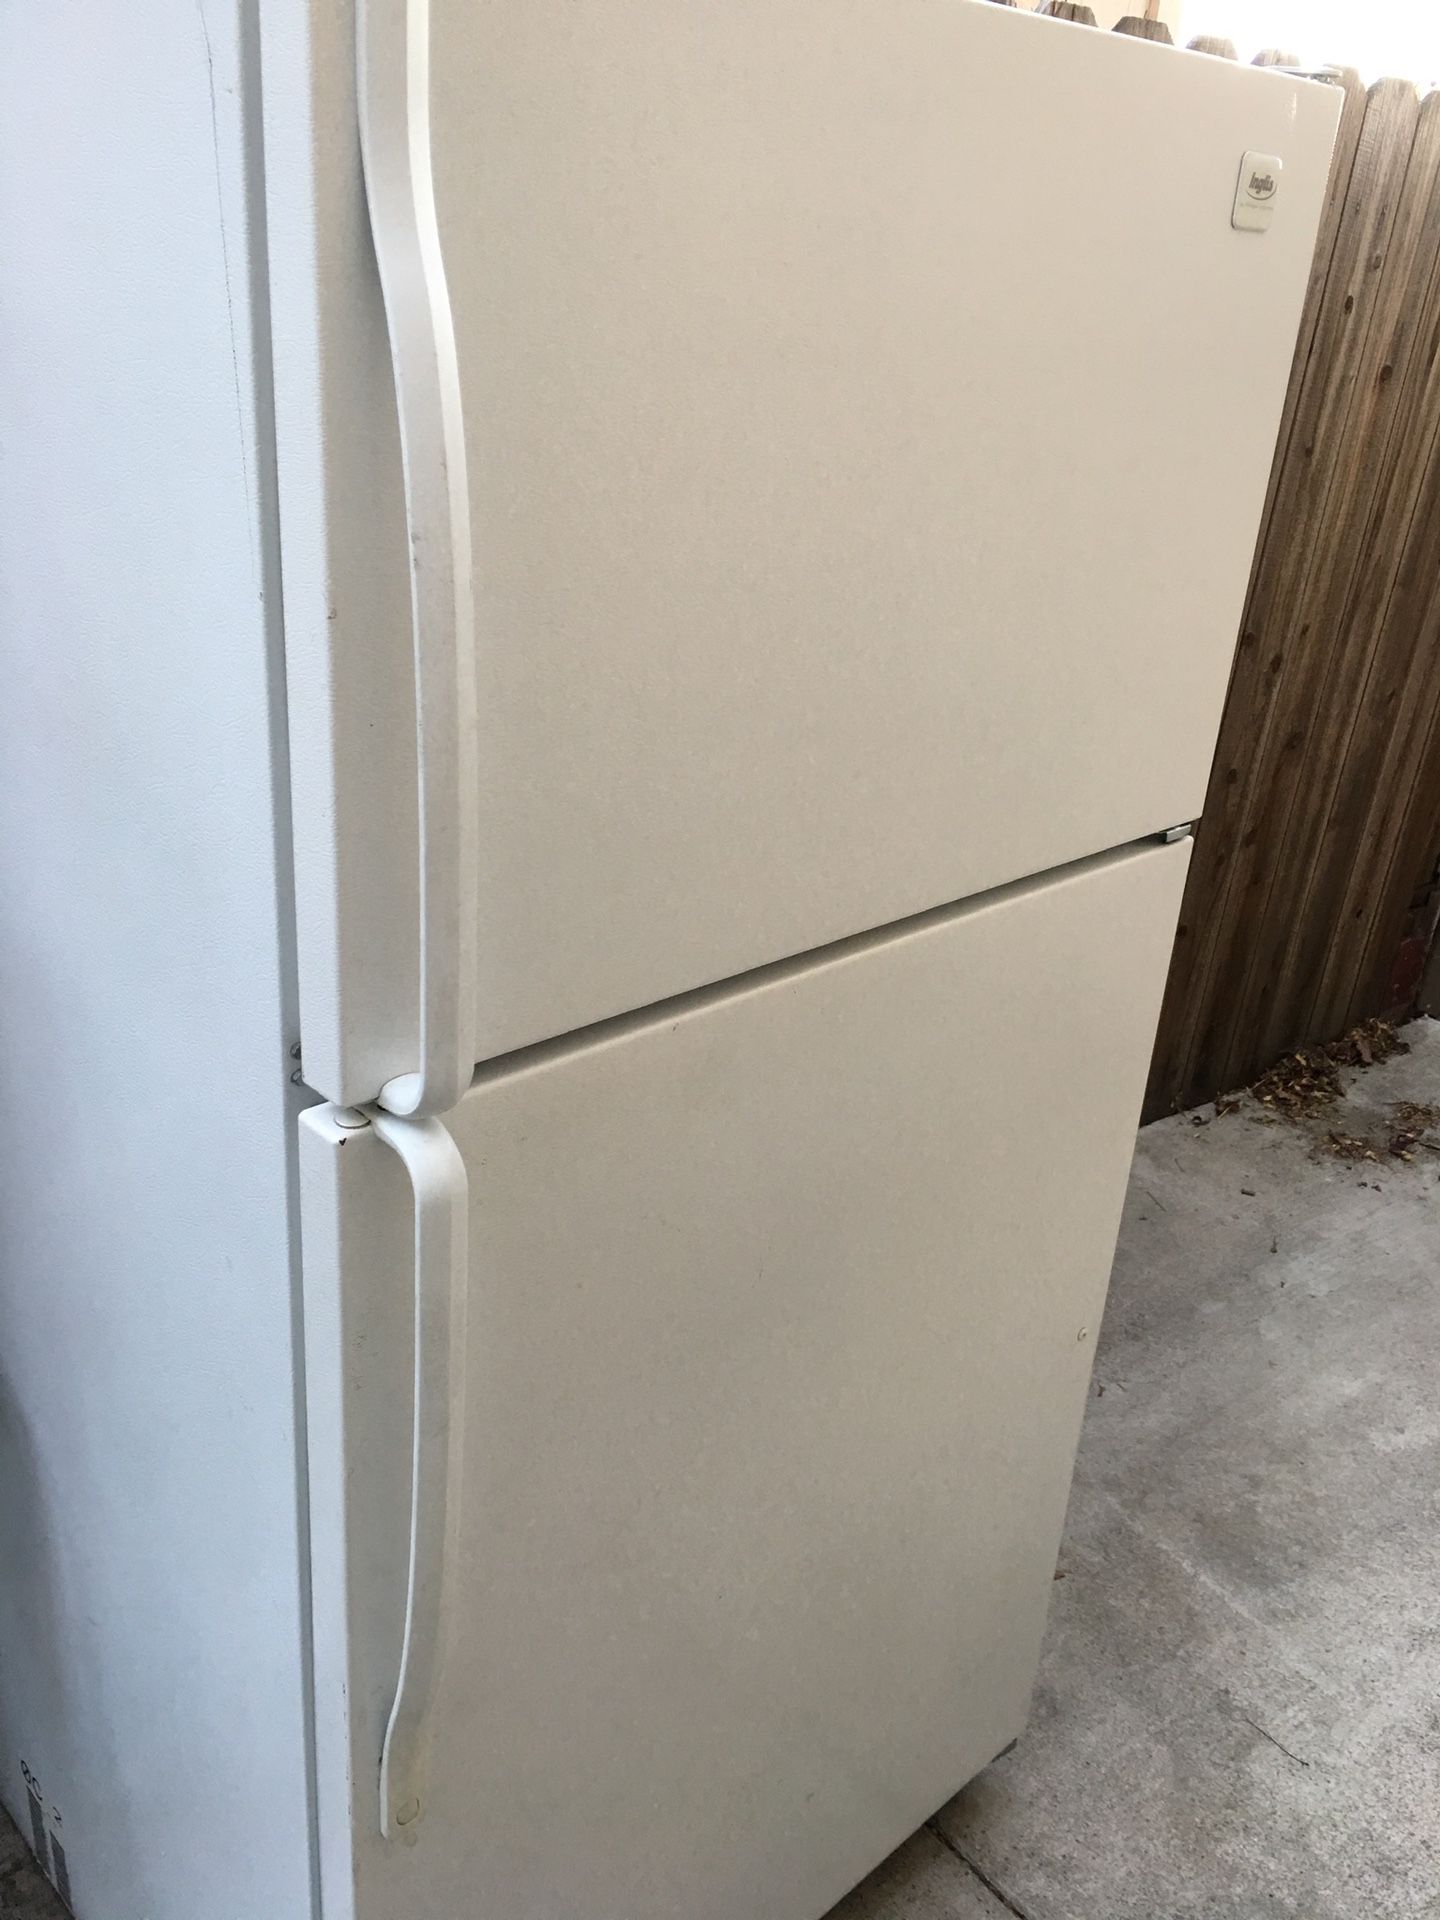 Whirlpool fridge refrigerator with freezer